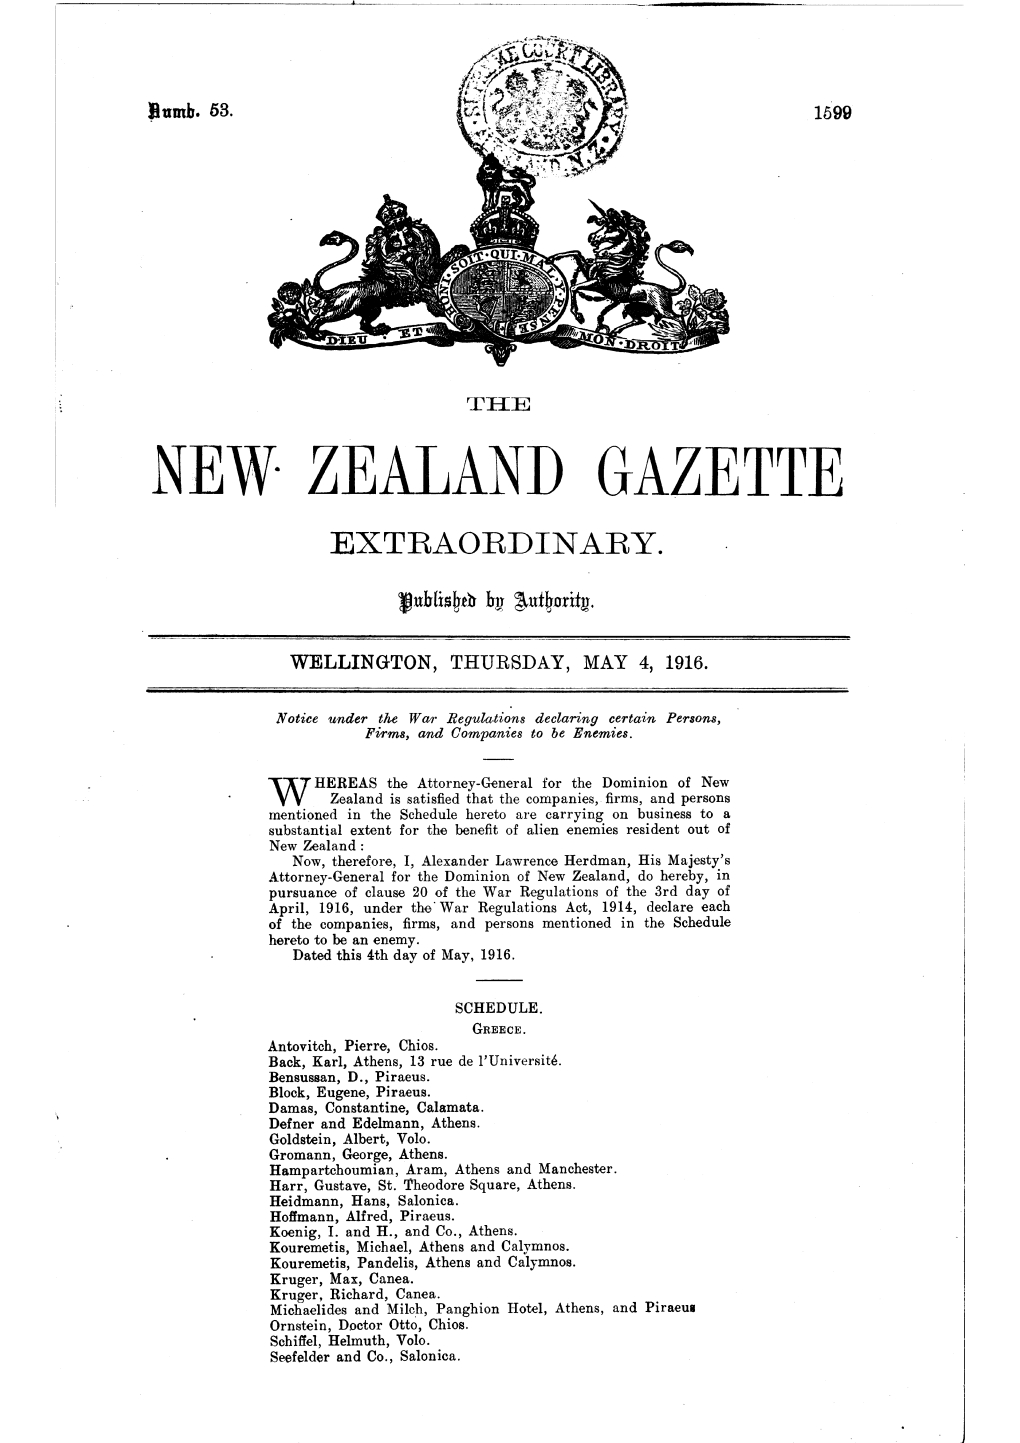 Zealand Gazette Extraordinary